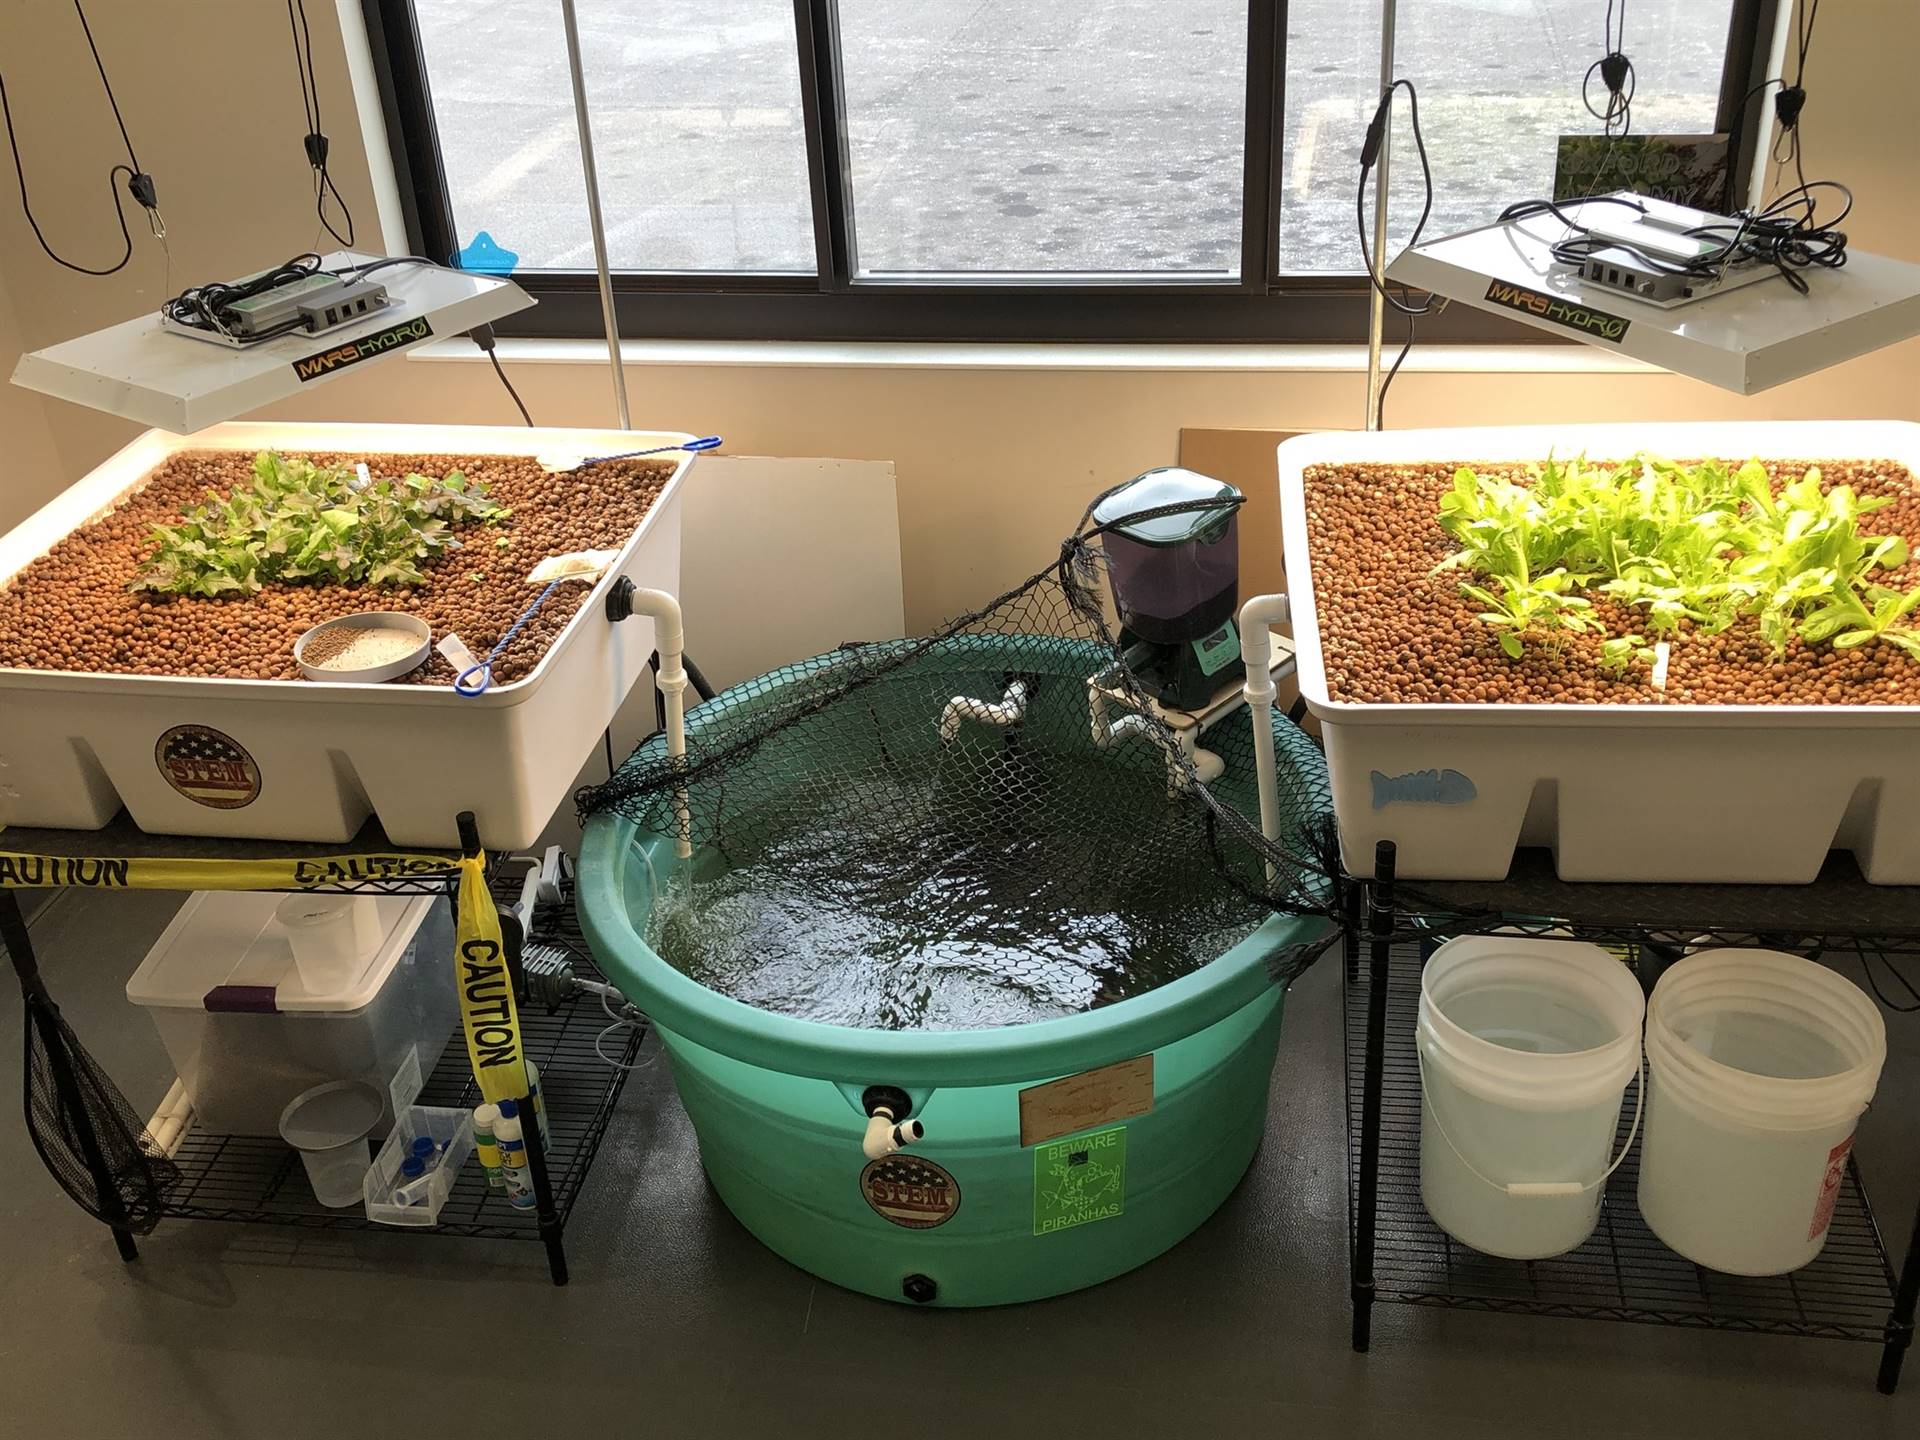 Aqua tank and plants